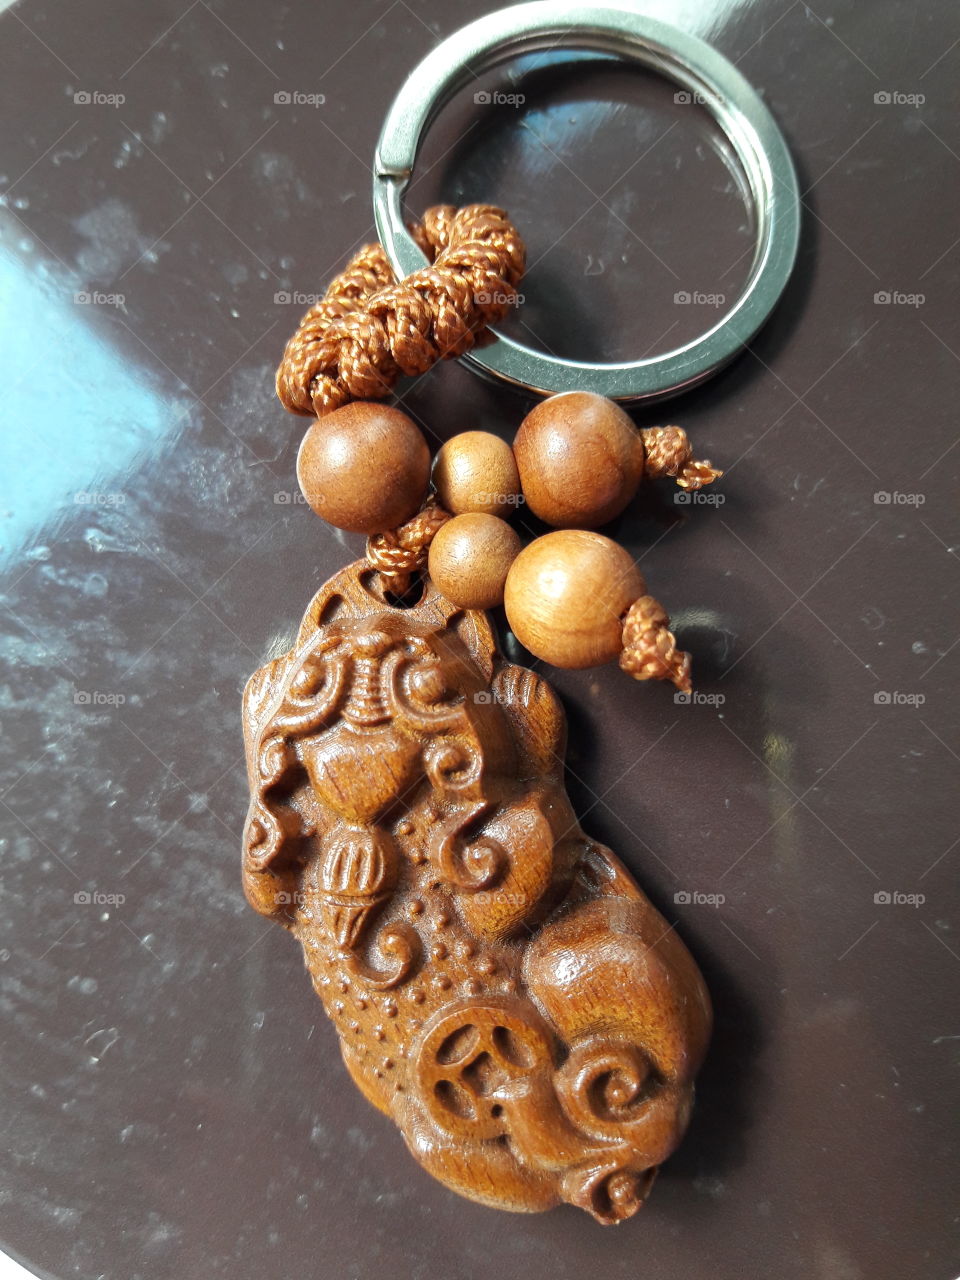 gems ring metal purple violet silver wooden key chain jewerly art work biju accesories buddha nepal faith